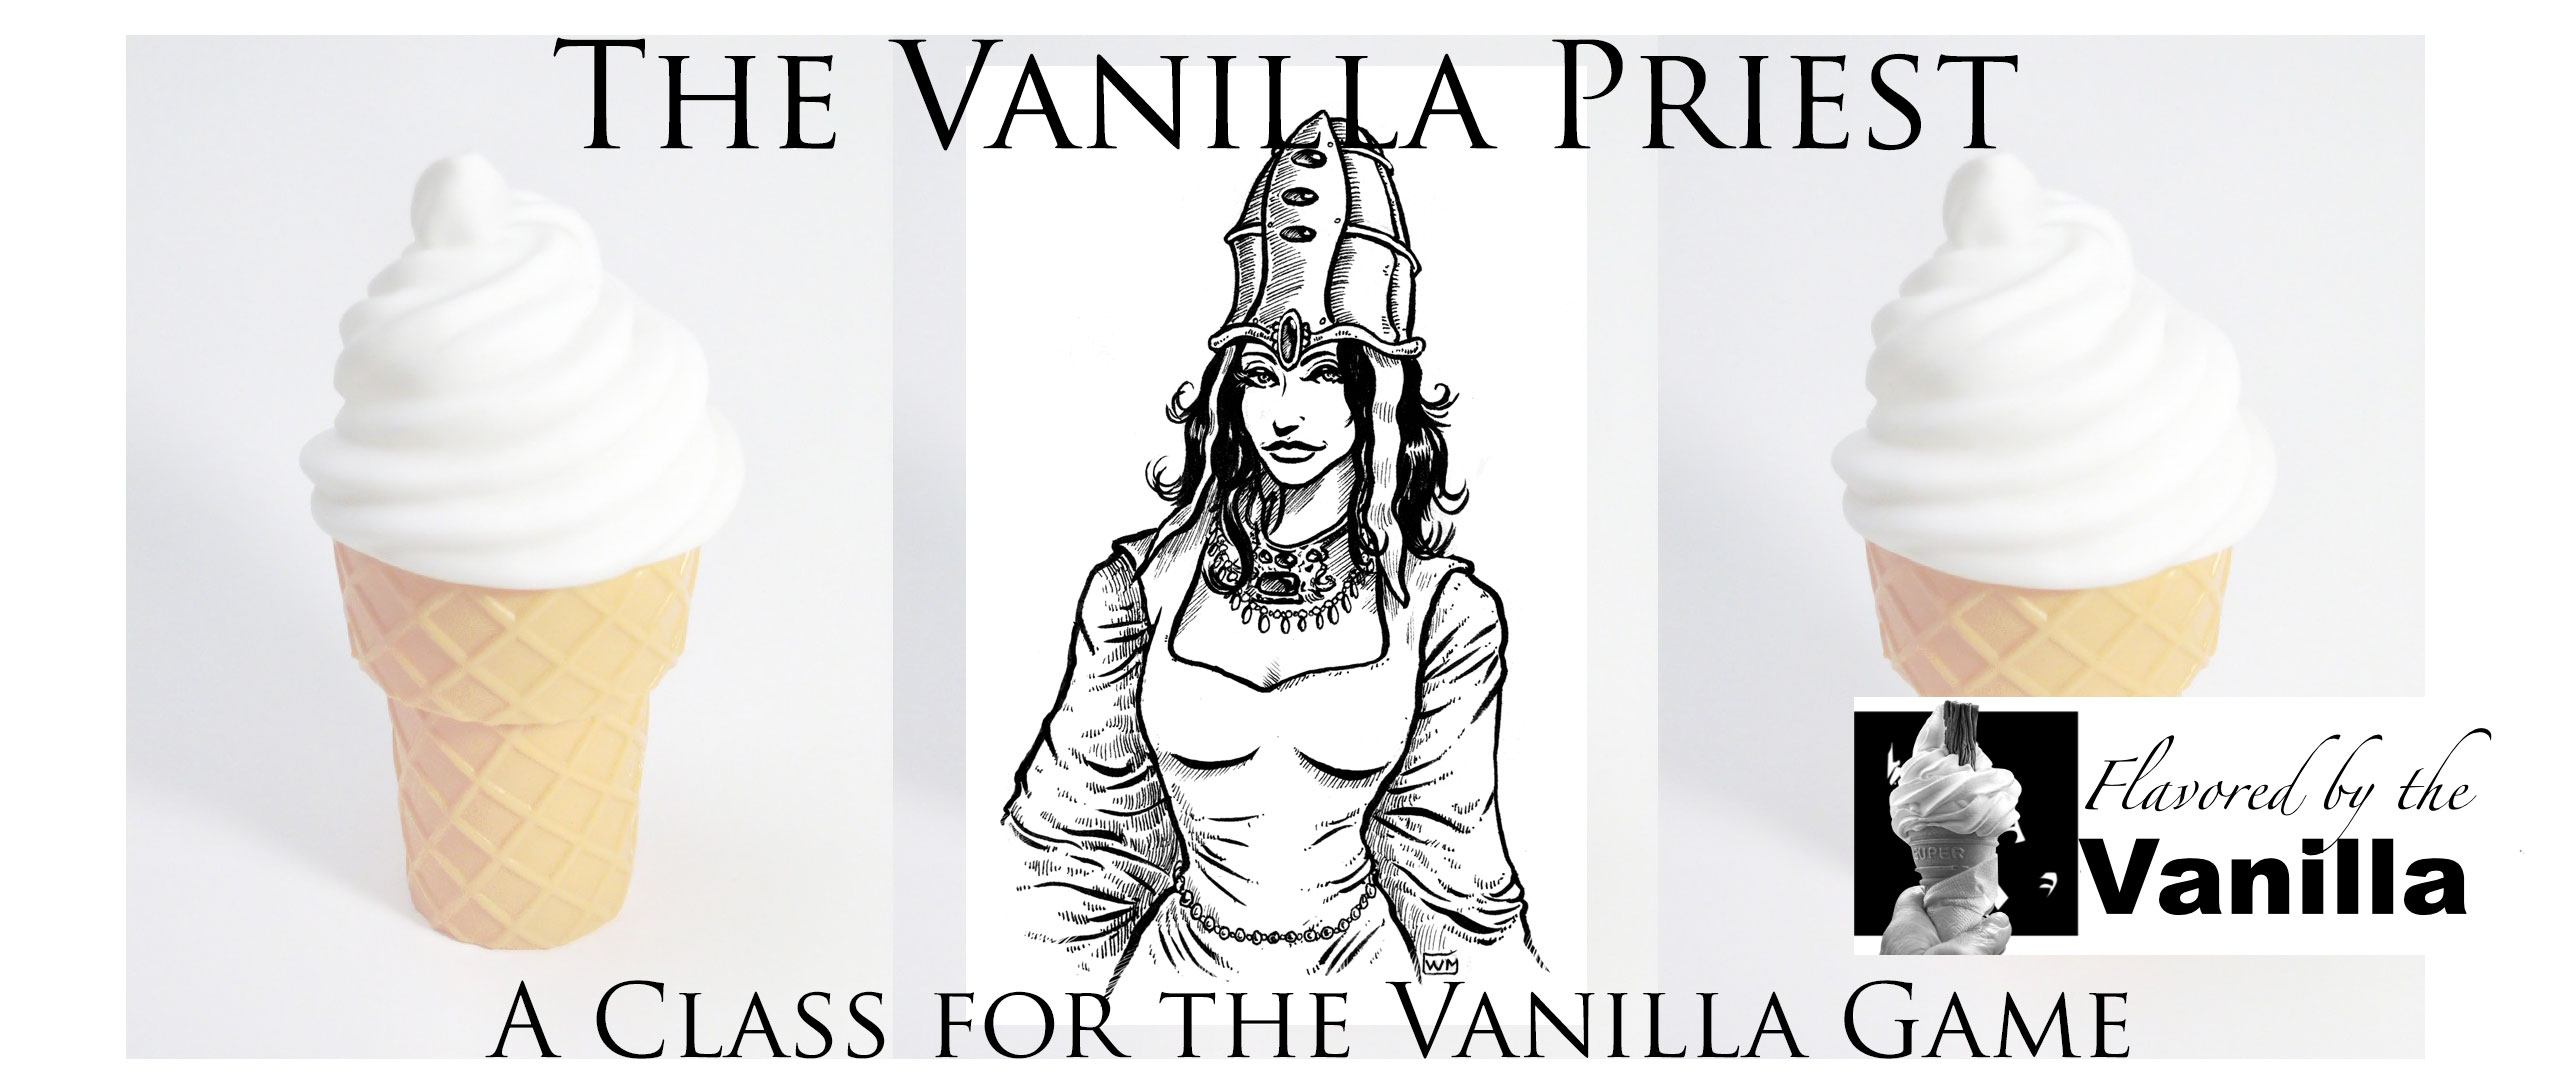 The Vanilla Priest